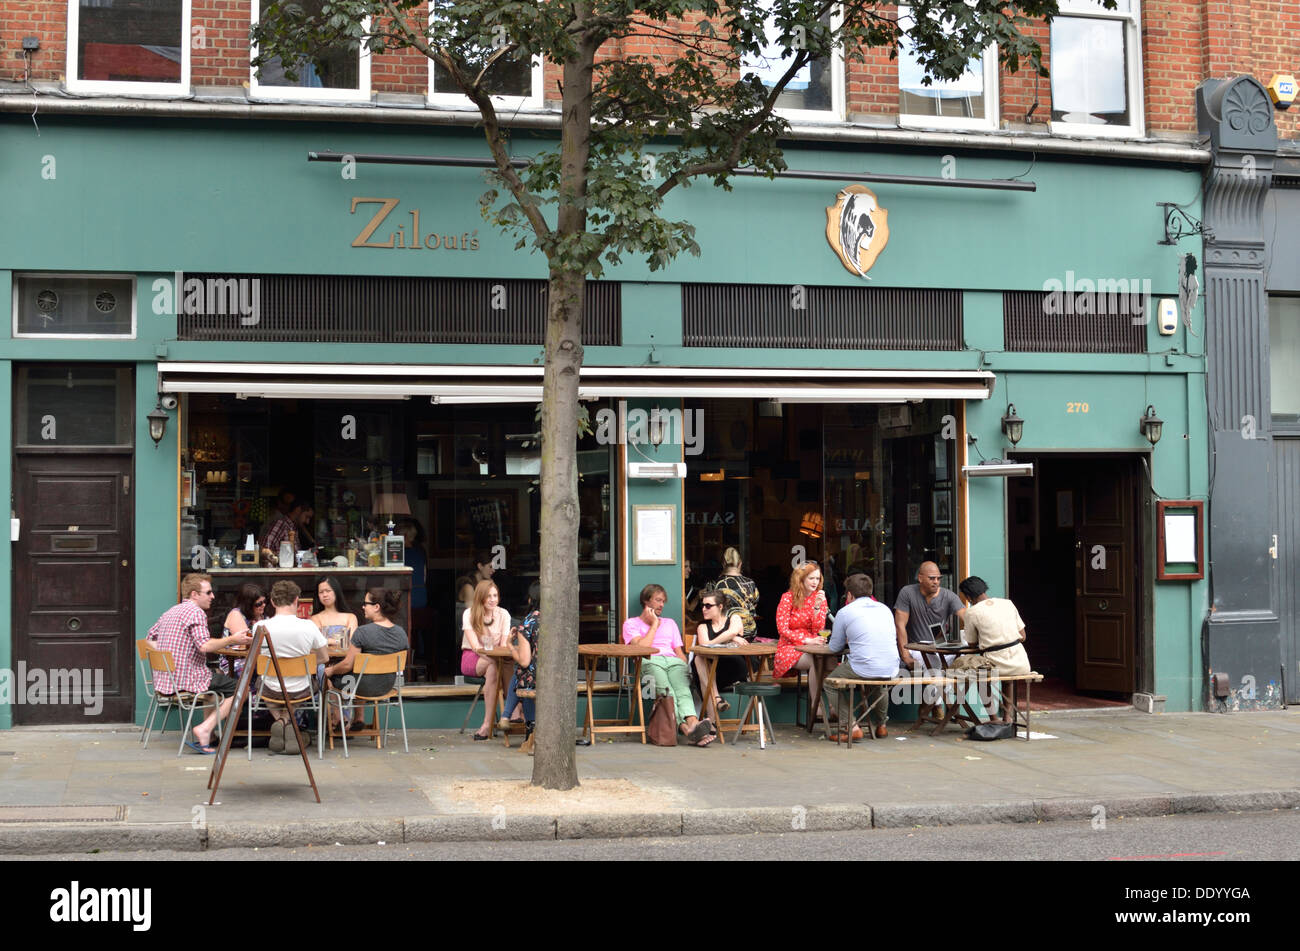 Zilouf's restaurant in Upper Street, Islington, London, UK. Stock Photo